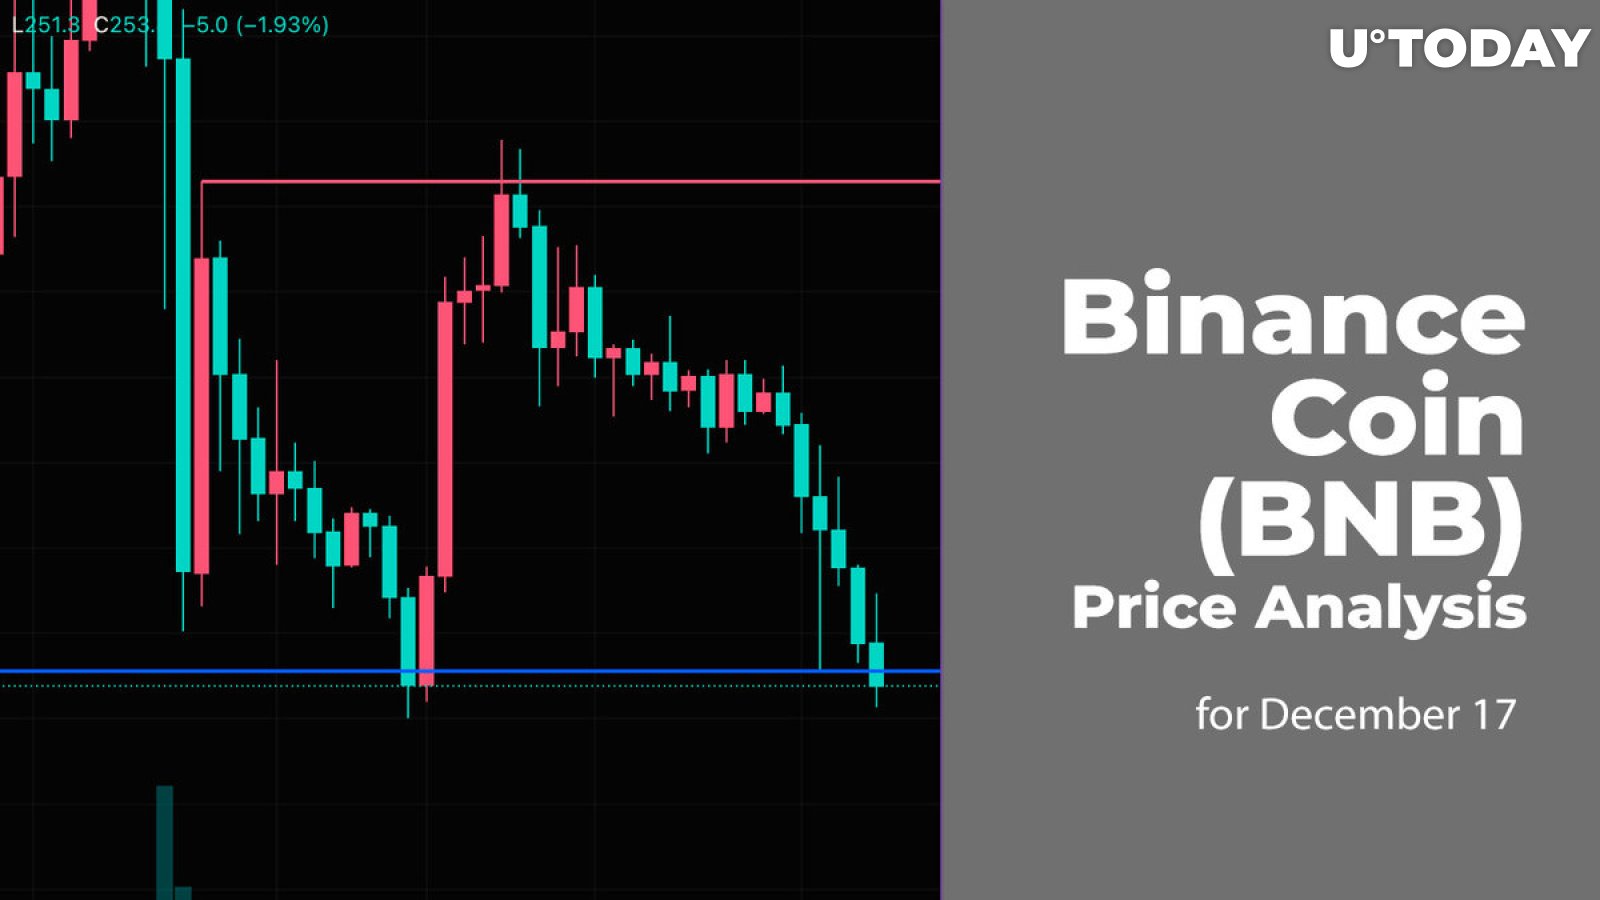 Binance Coin (BNB) Price Analysis for December 17